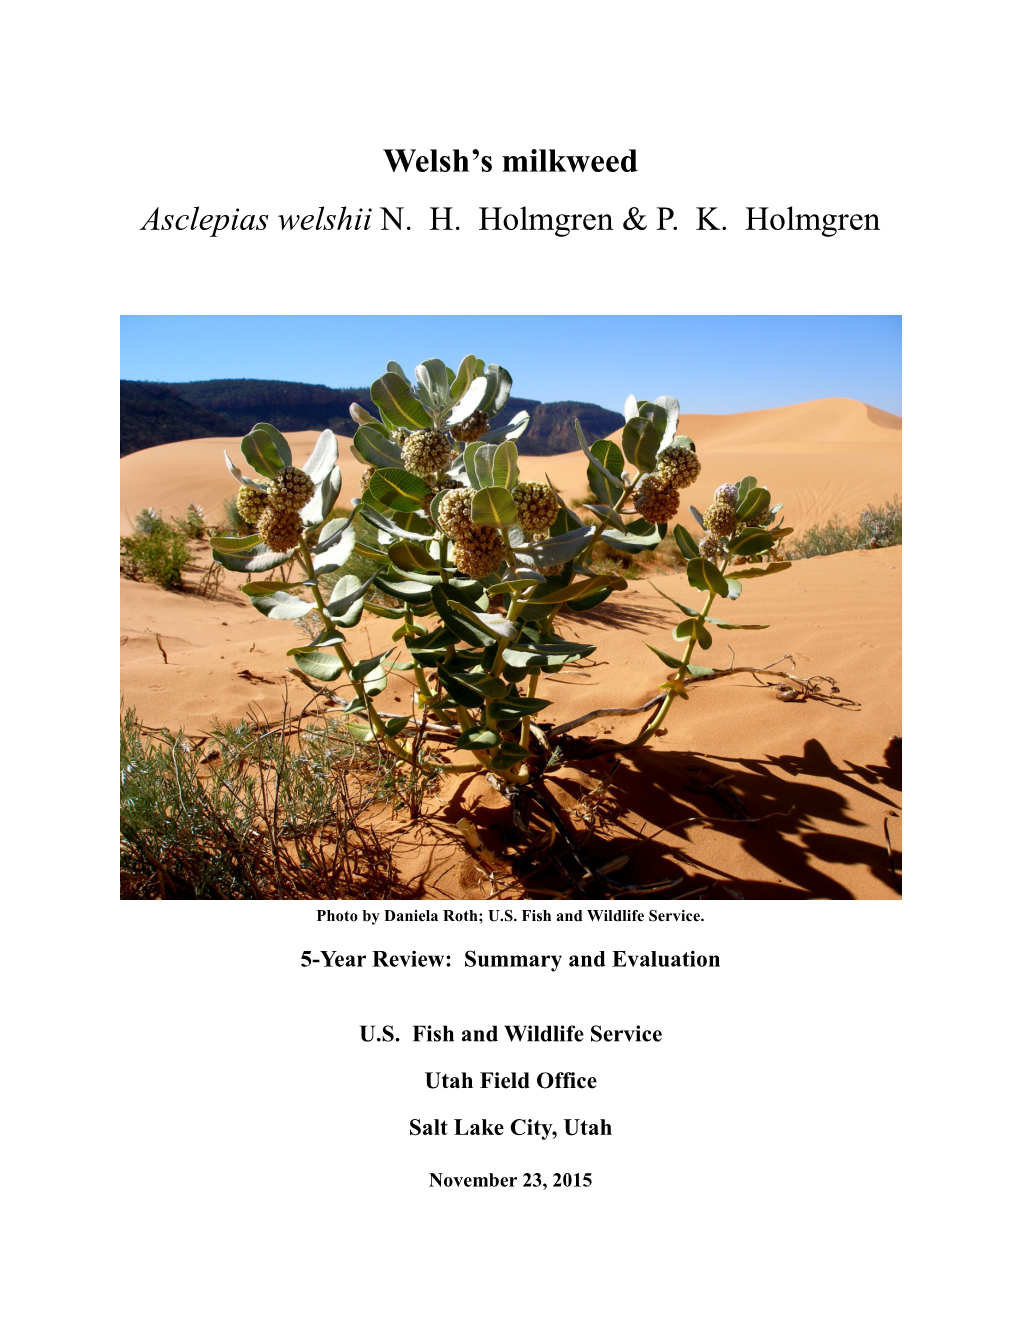 Welsh's Milkweed Asclepias Welshii N. H. Holmgren & P. K. Holmgren